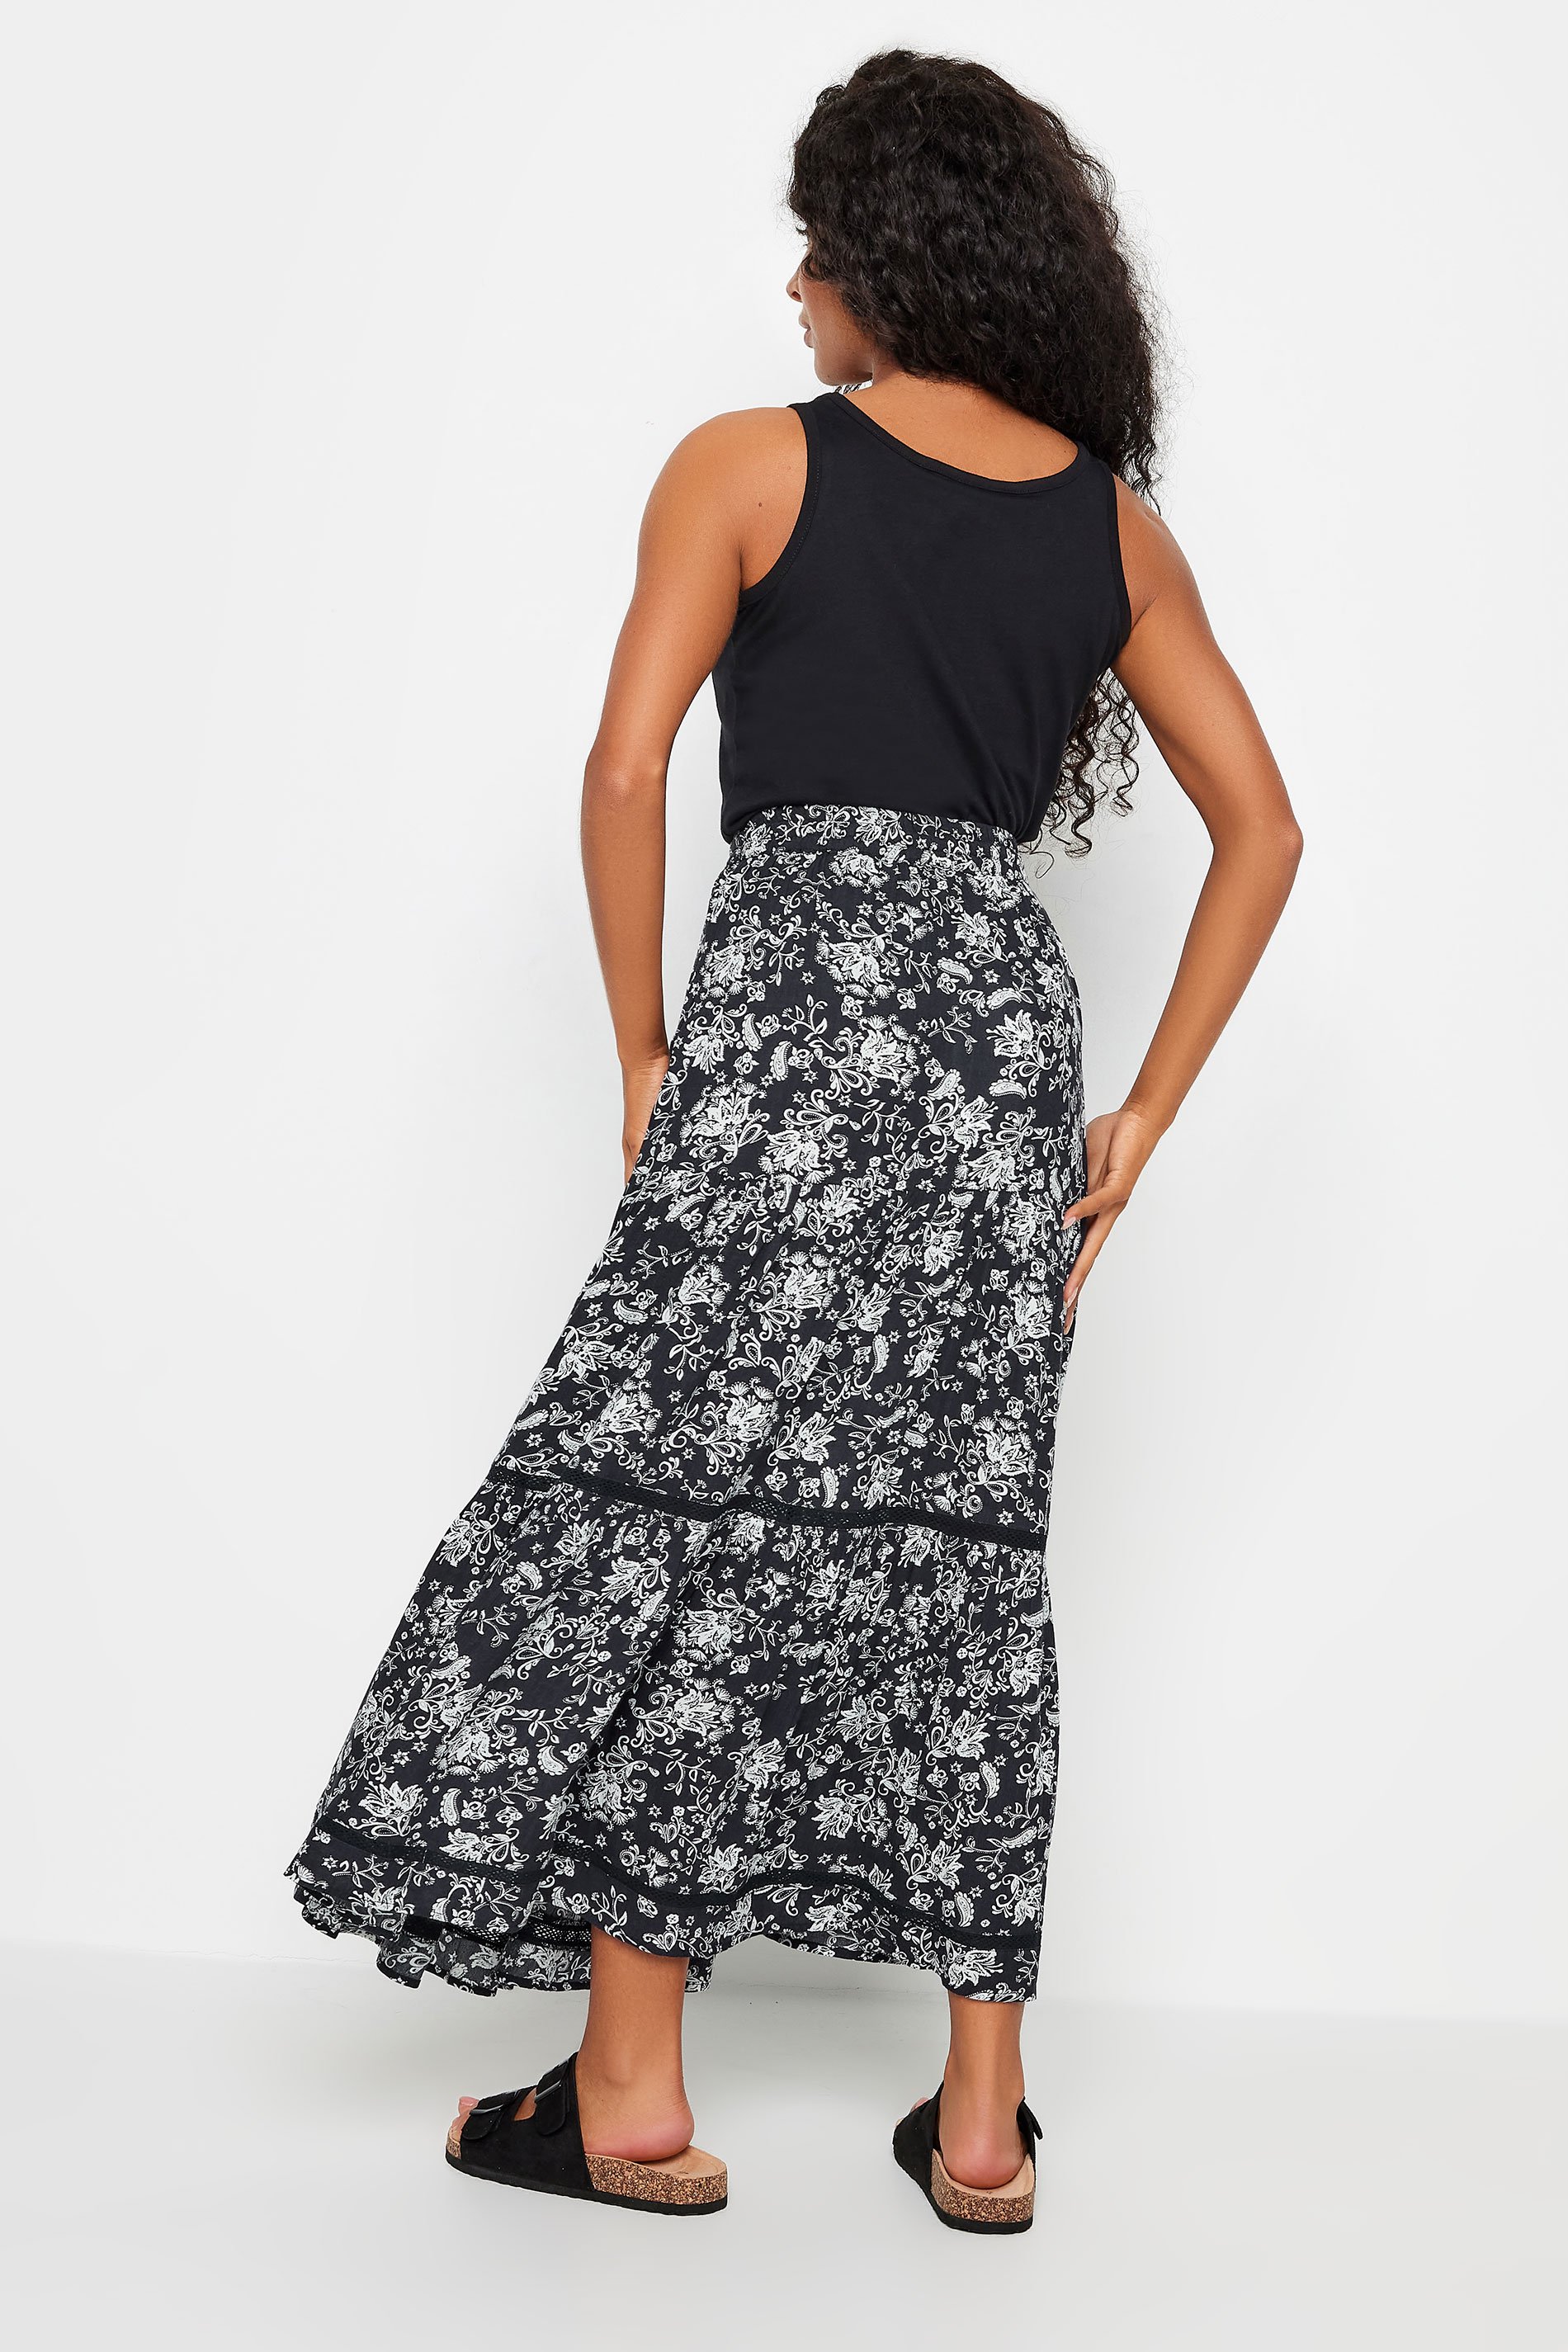 M&Co Petite Black & White Damask Print Tiered Maxi Skirt | M&Co 3